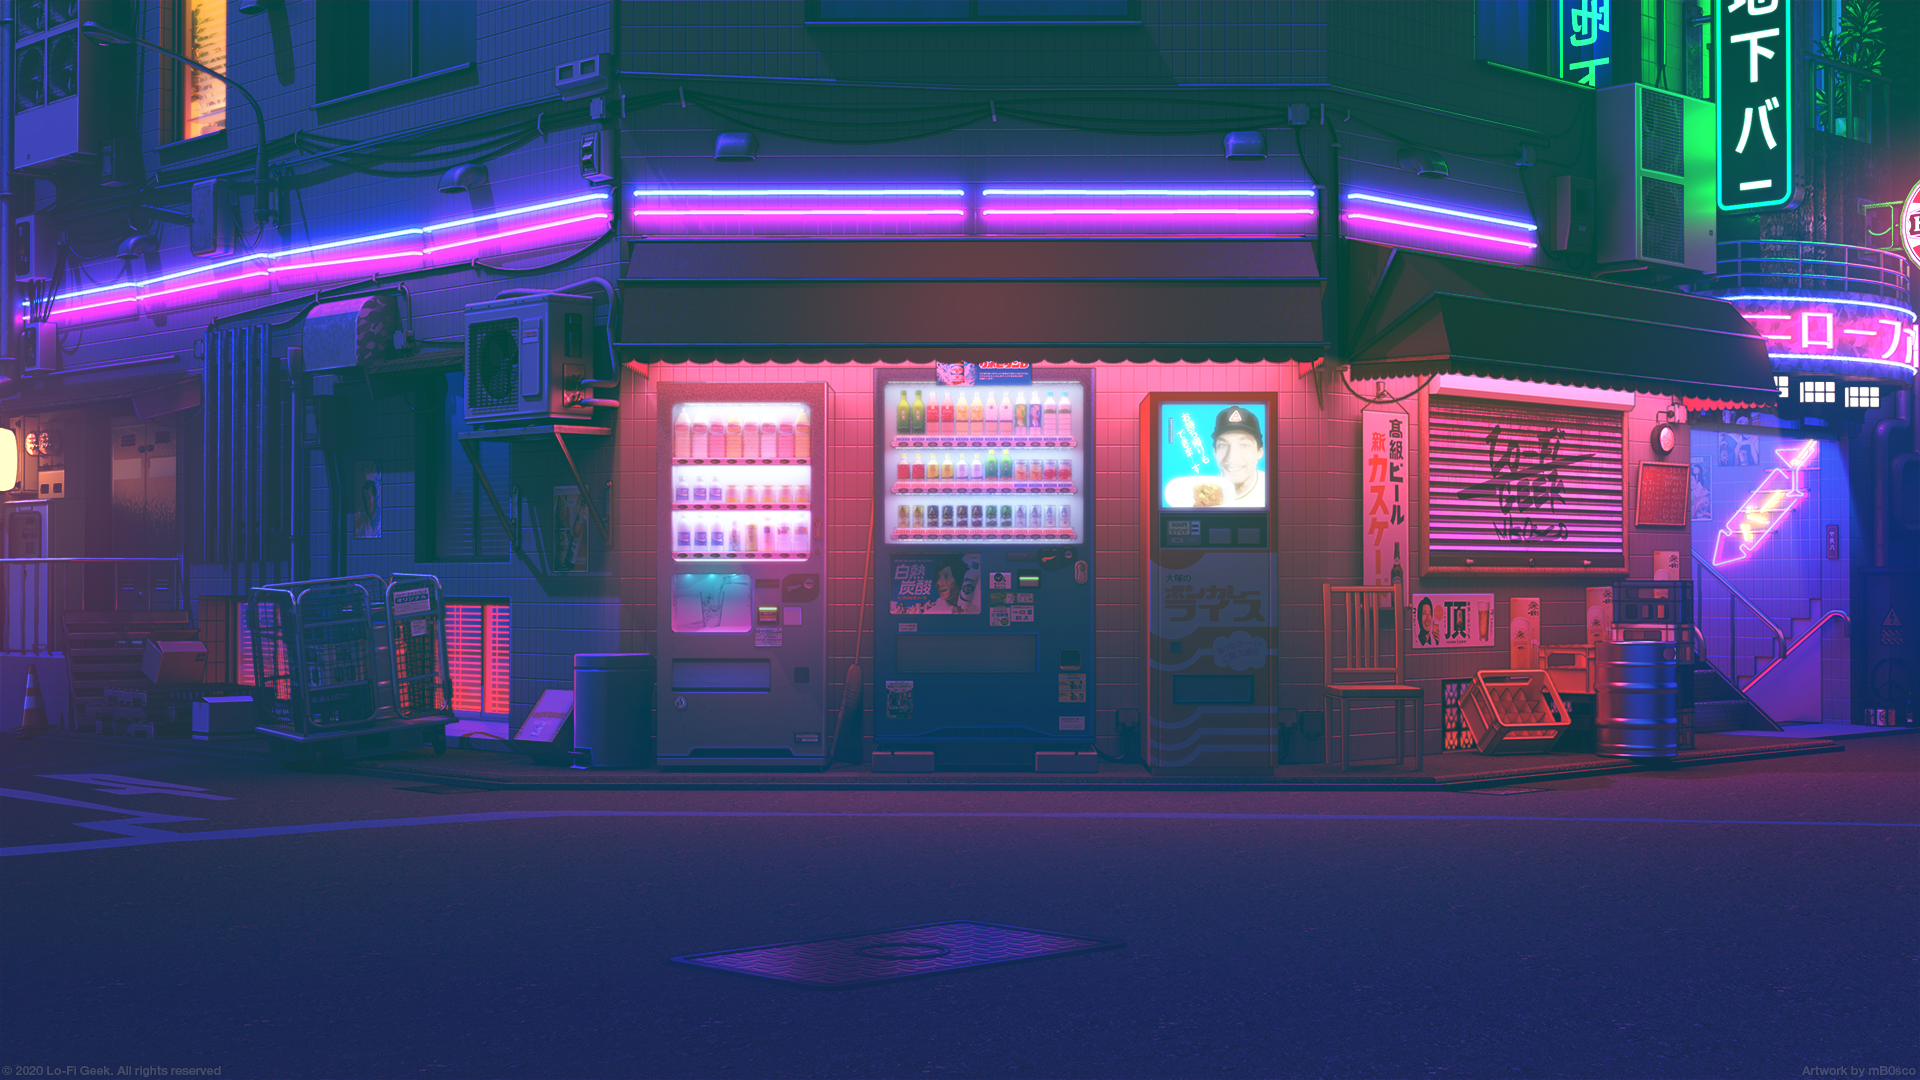 Arcade ROOM by mB0sco on DeviantArt